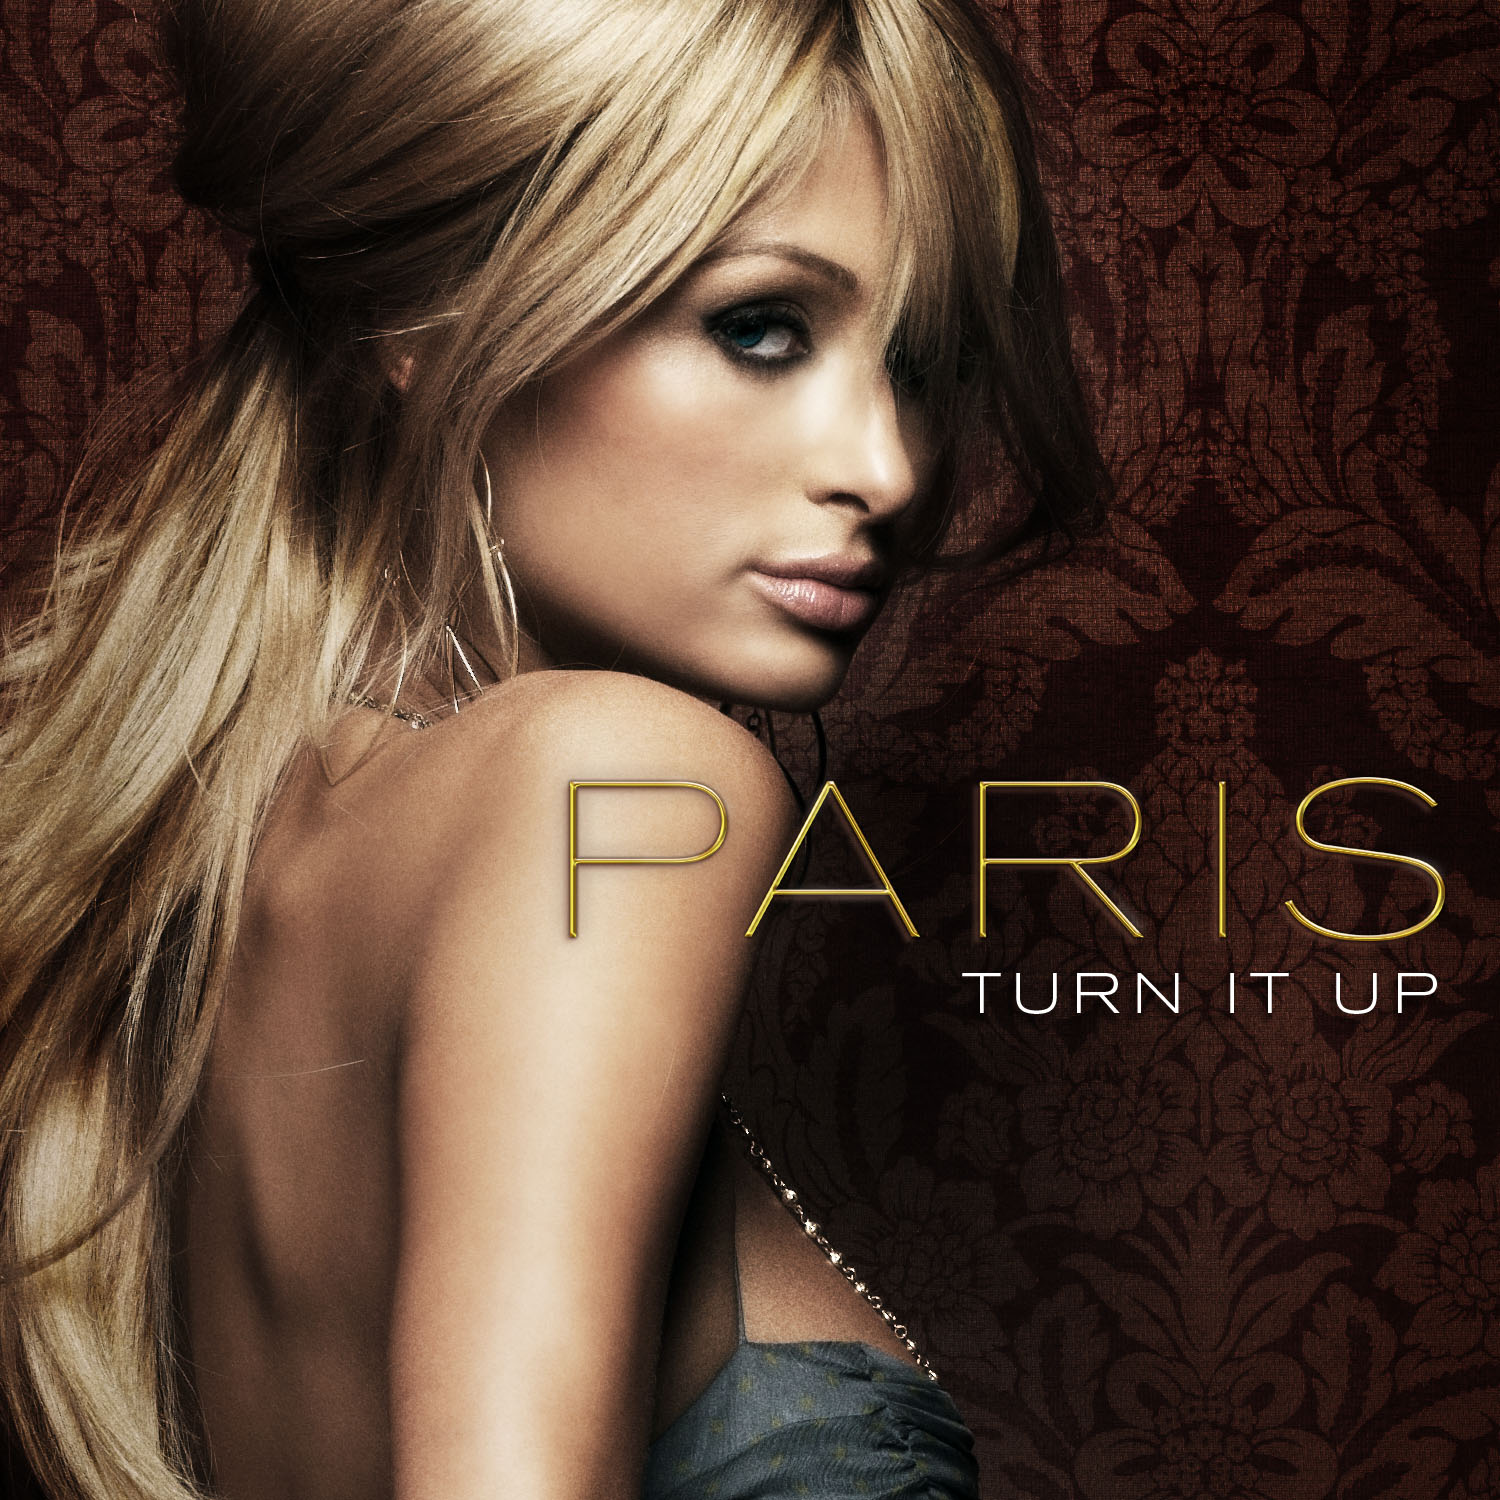 Paris Hilton Turn It Up